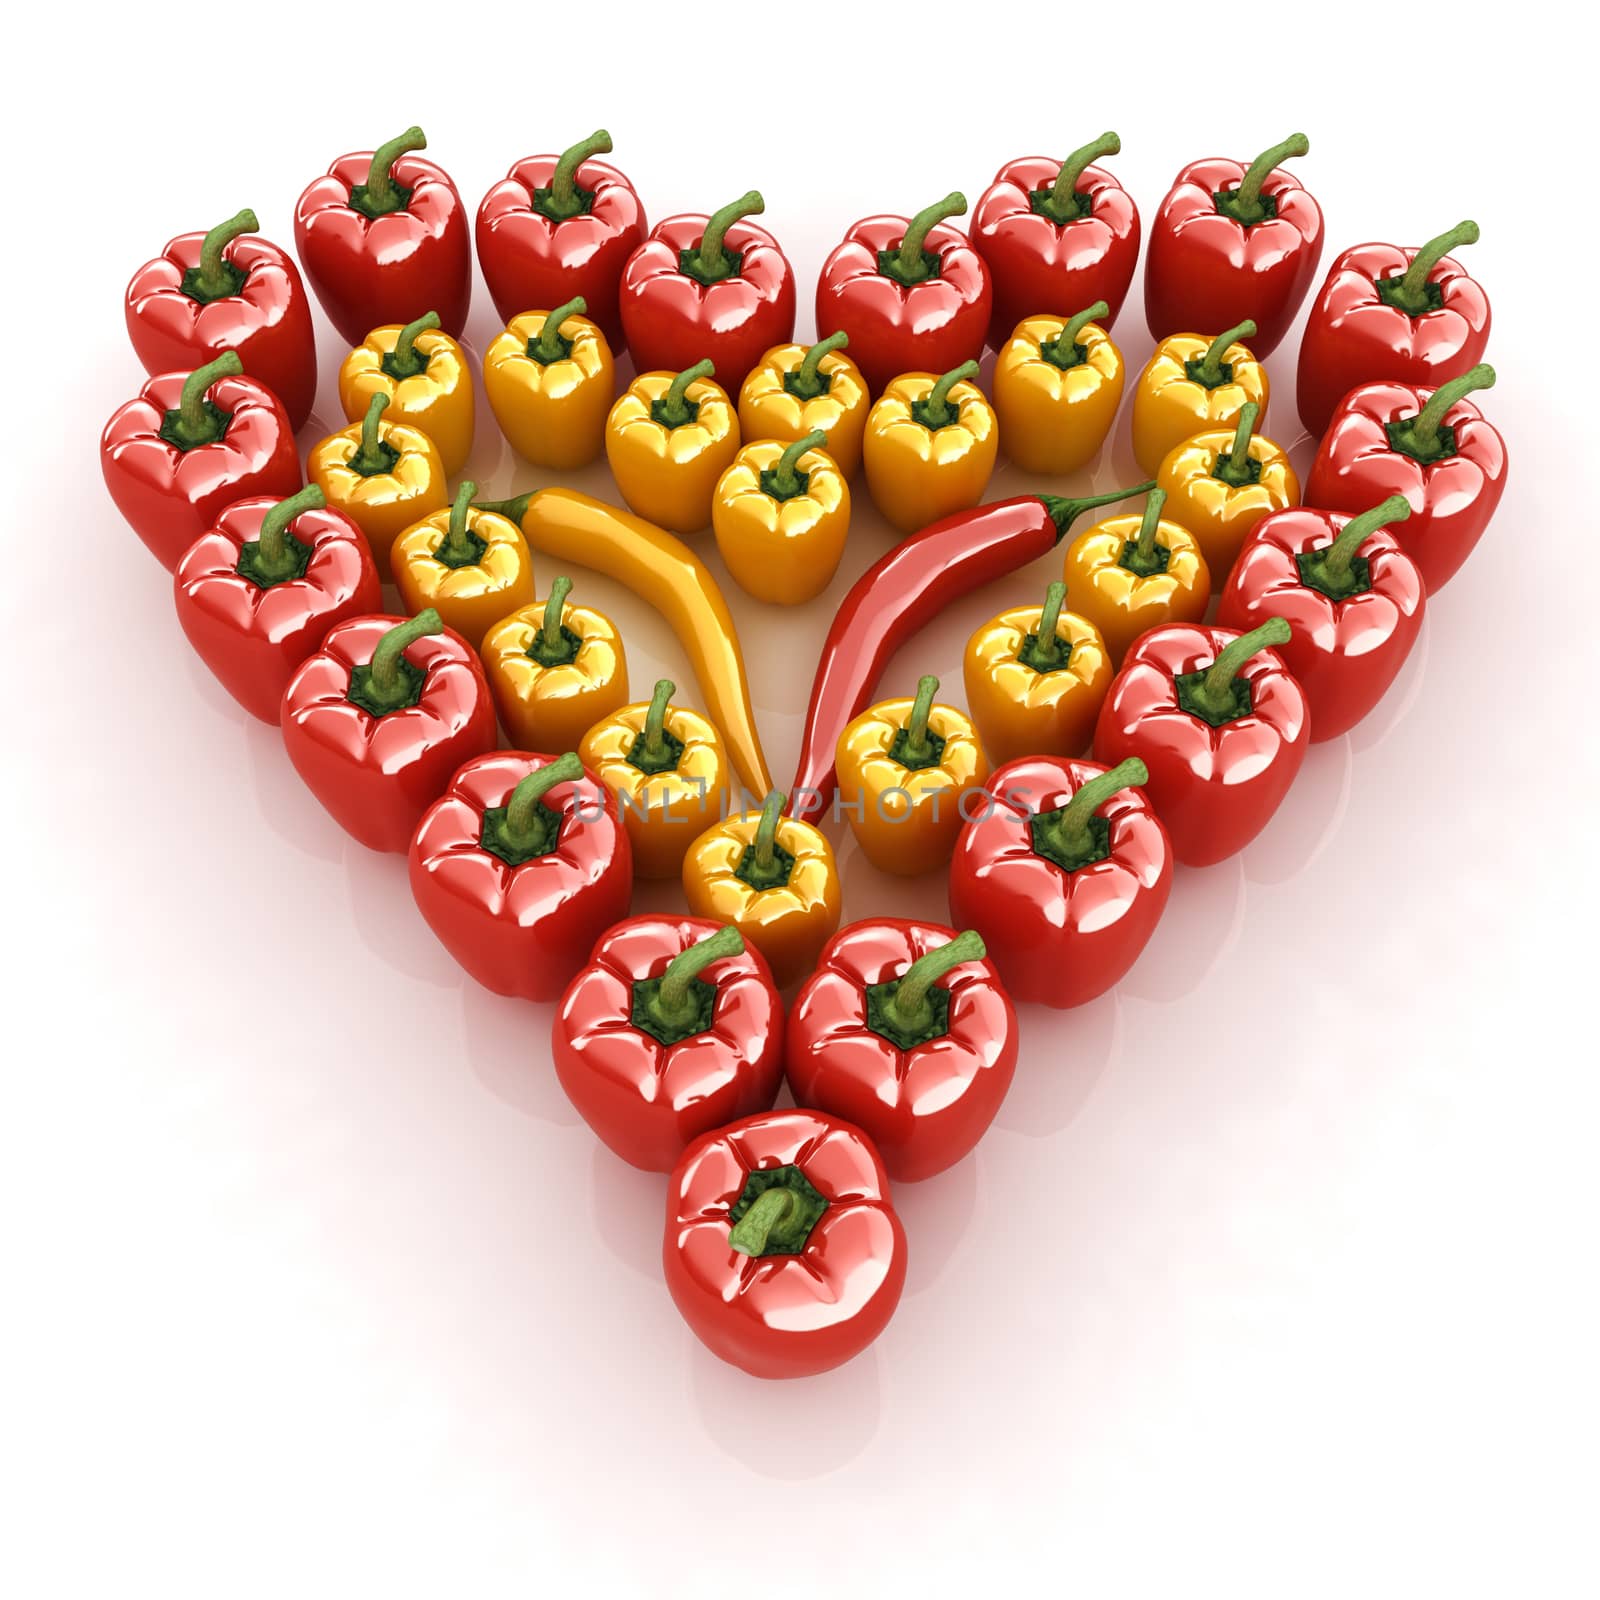 Bulgarian Pepper Heart Shape, On White Background by Guru3D